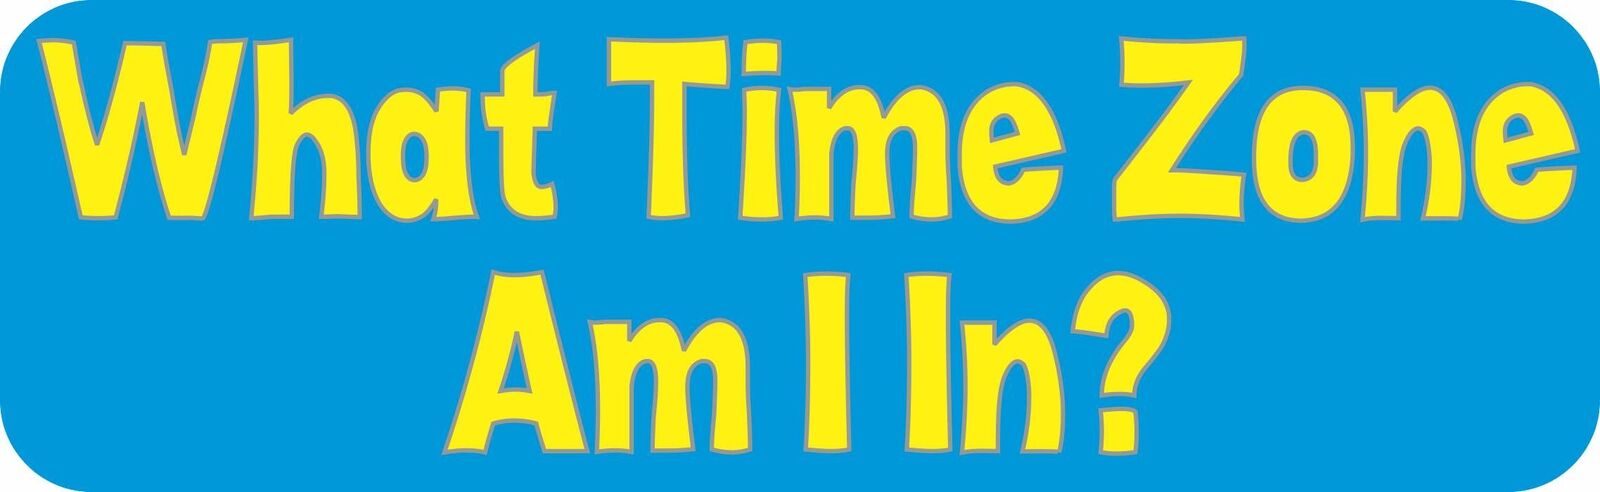 10x3 What Time Zone Am I In? Bumper Sticker Vinyl Window Stickers Hobbies Decals